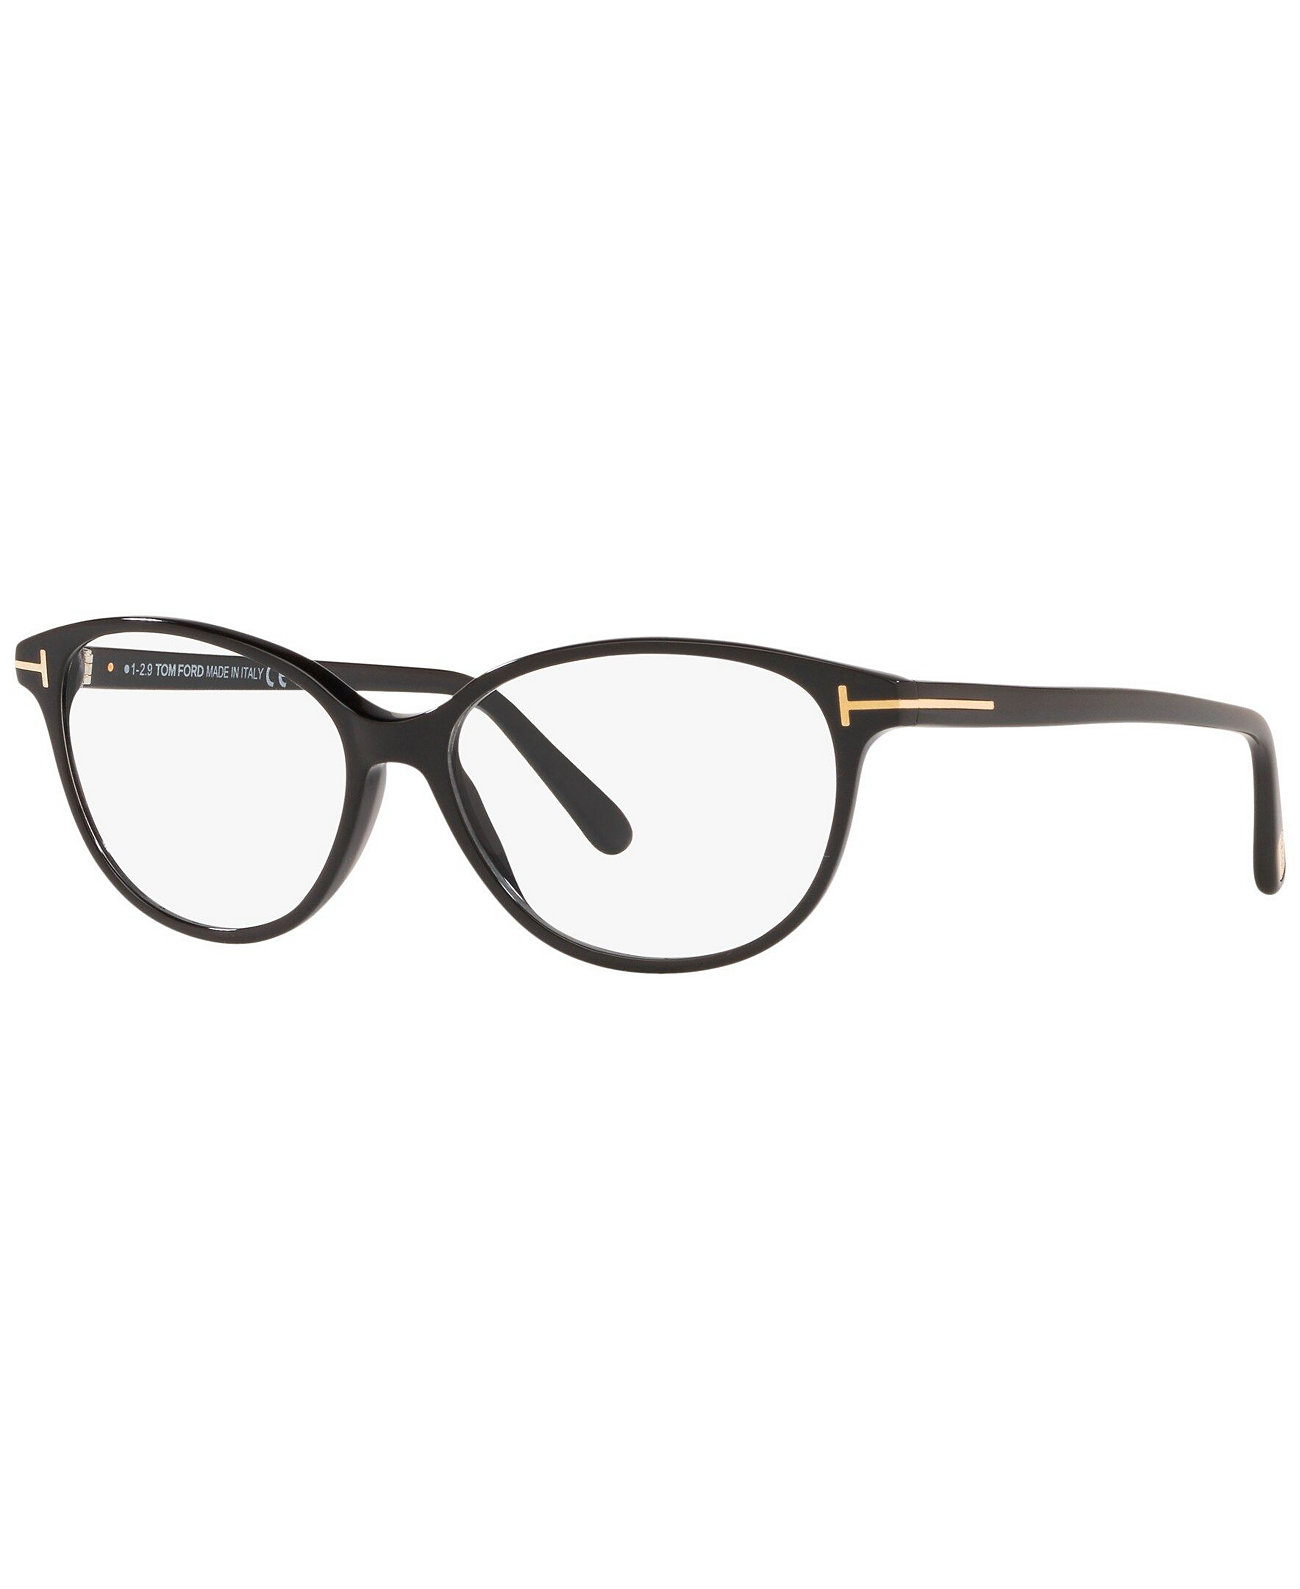 TR000873 Женские очки «кошачий глаз» Tom Ford